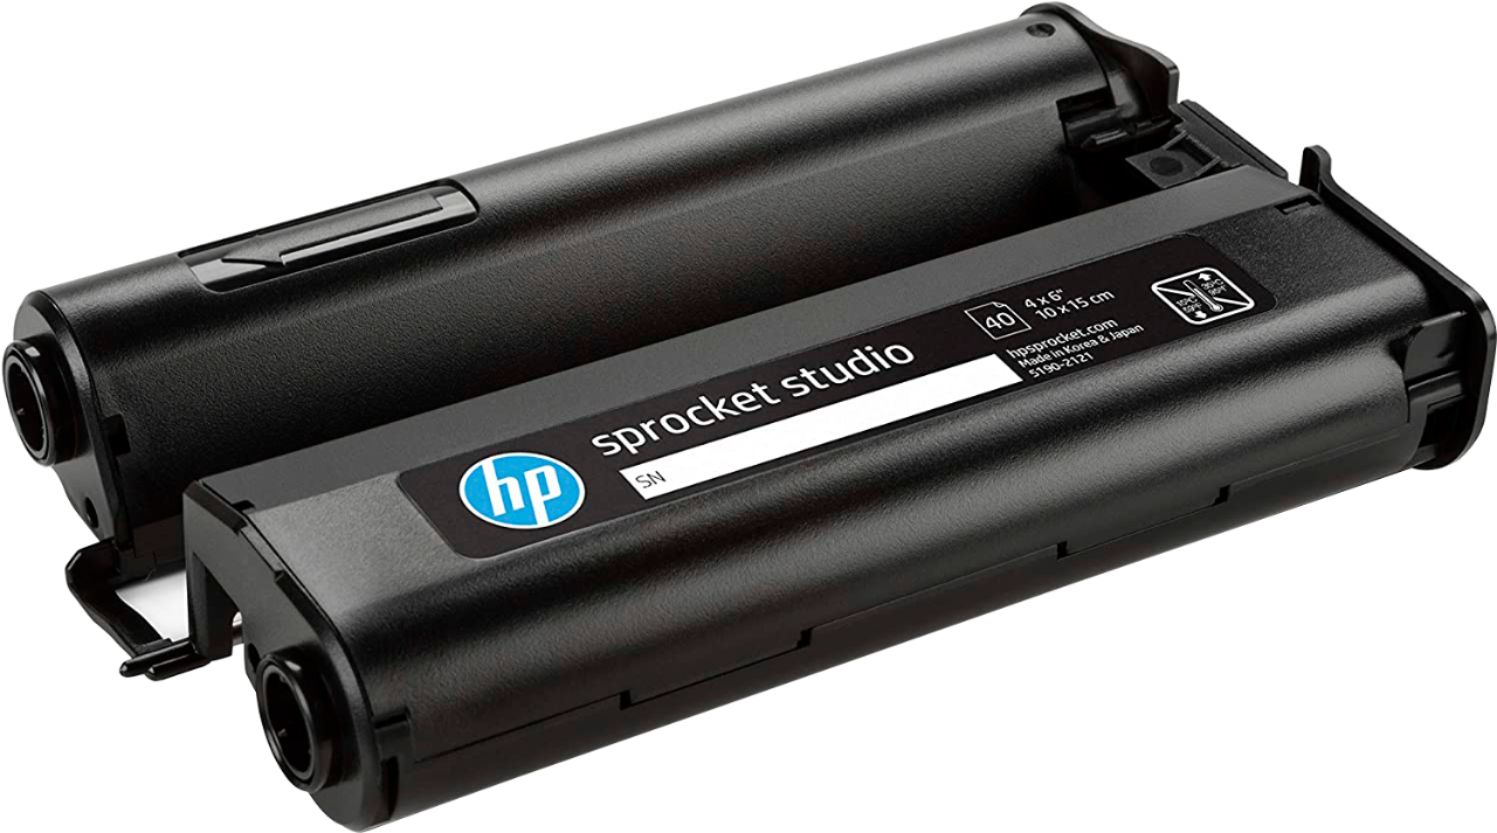 HP Sprocket Studio 4x6 Photo Paper & Cartridges (80 Sheets - 2